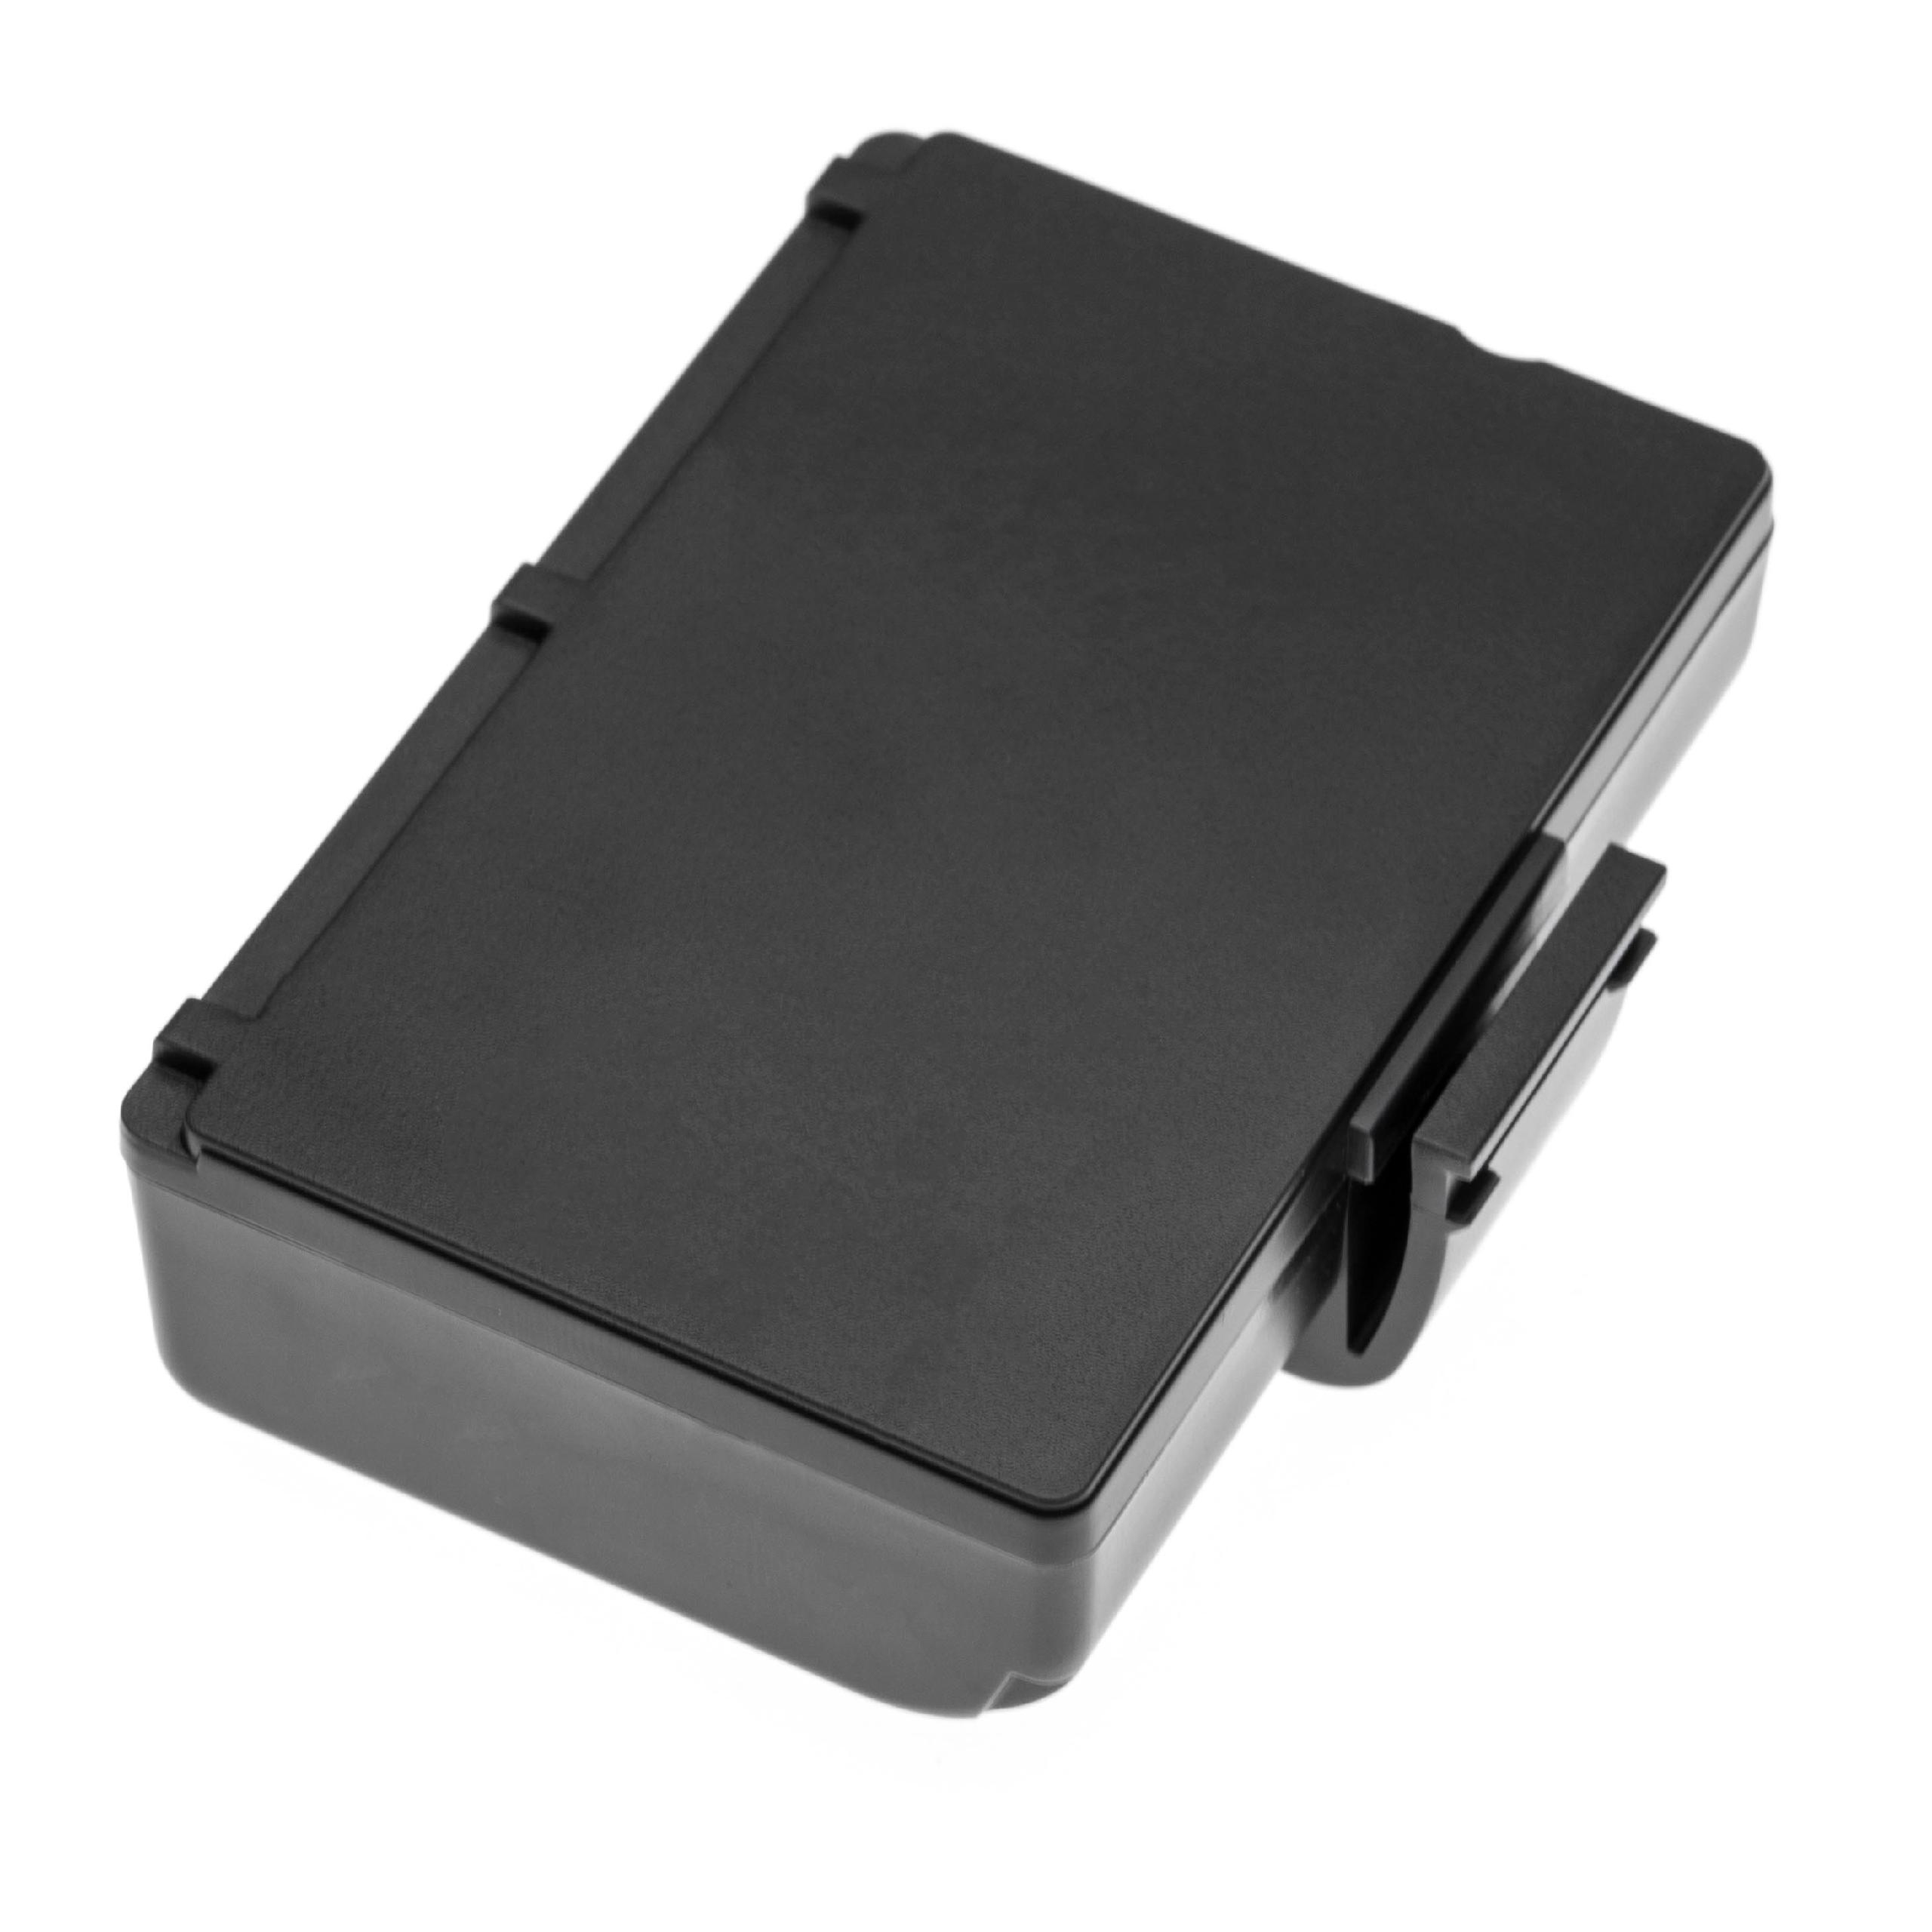 Printer Battery Replacement for Zebra AT16004, BTRY-MPP-34MA1-01, BTRY-MPP-34MAHC1-01 - 2600mAh 7.4V Li-Ion